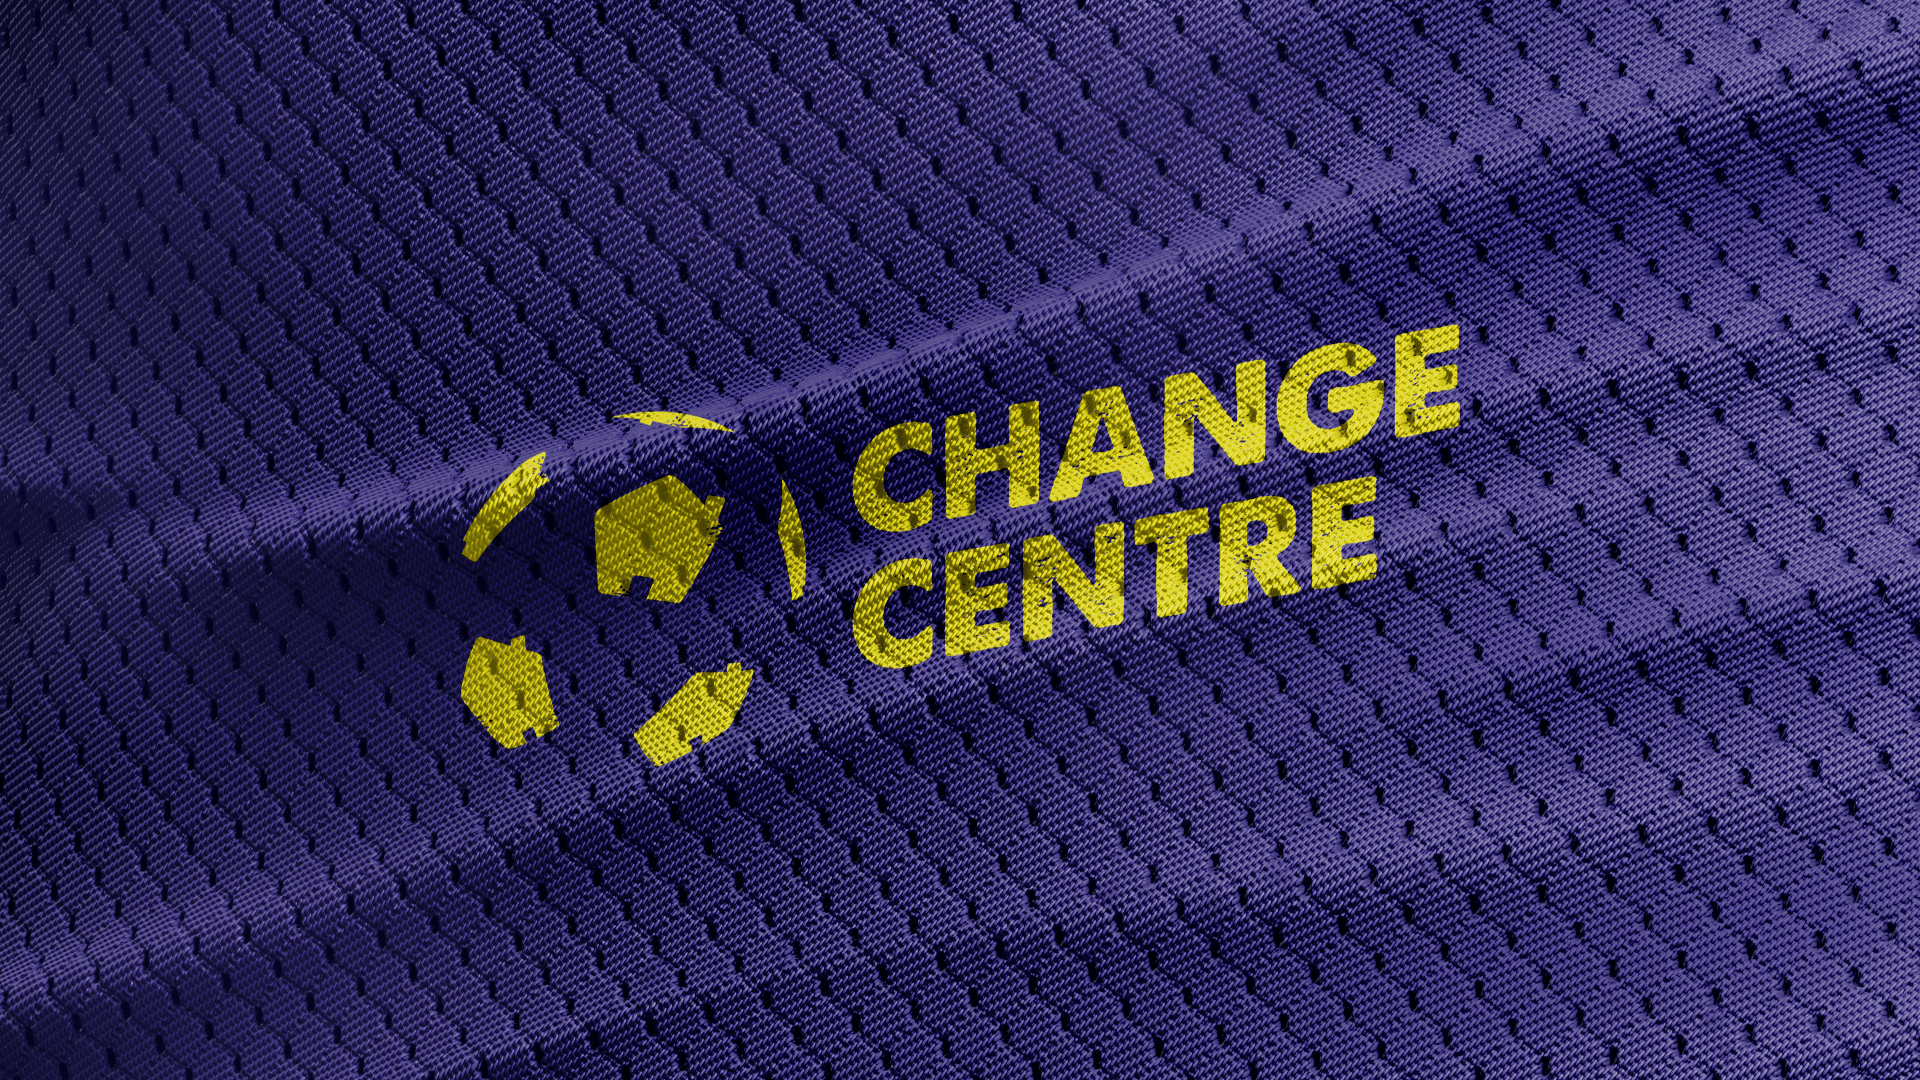 Change Centre